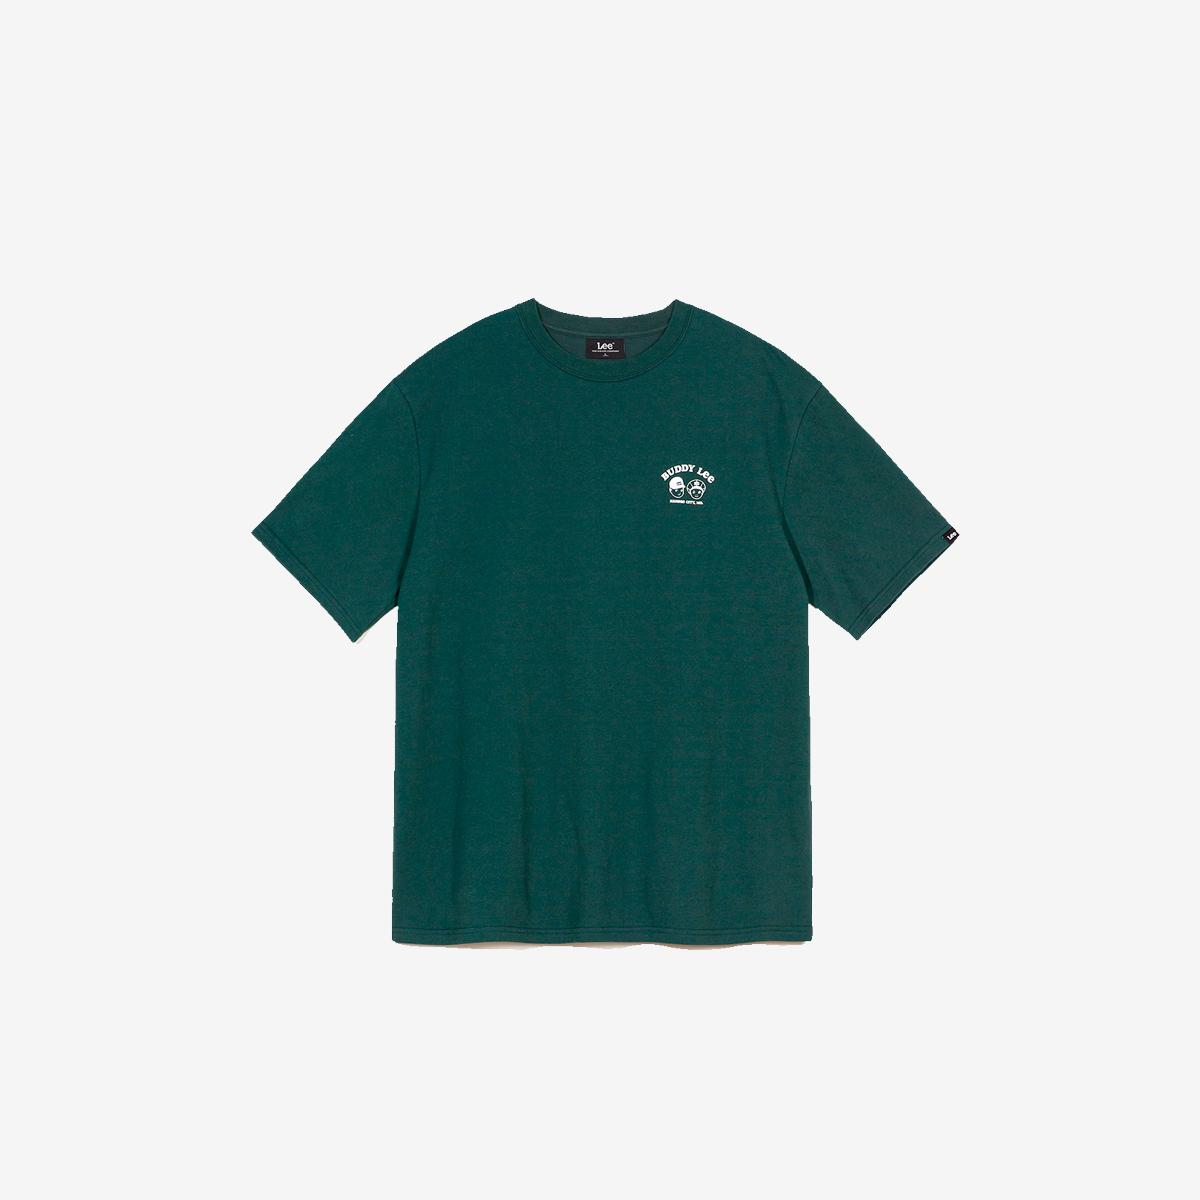 BUDDY LEE SLOGAN 短袖T恤（綠色）